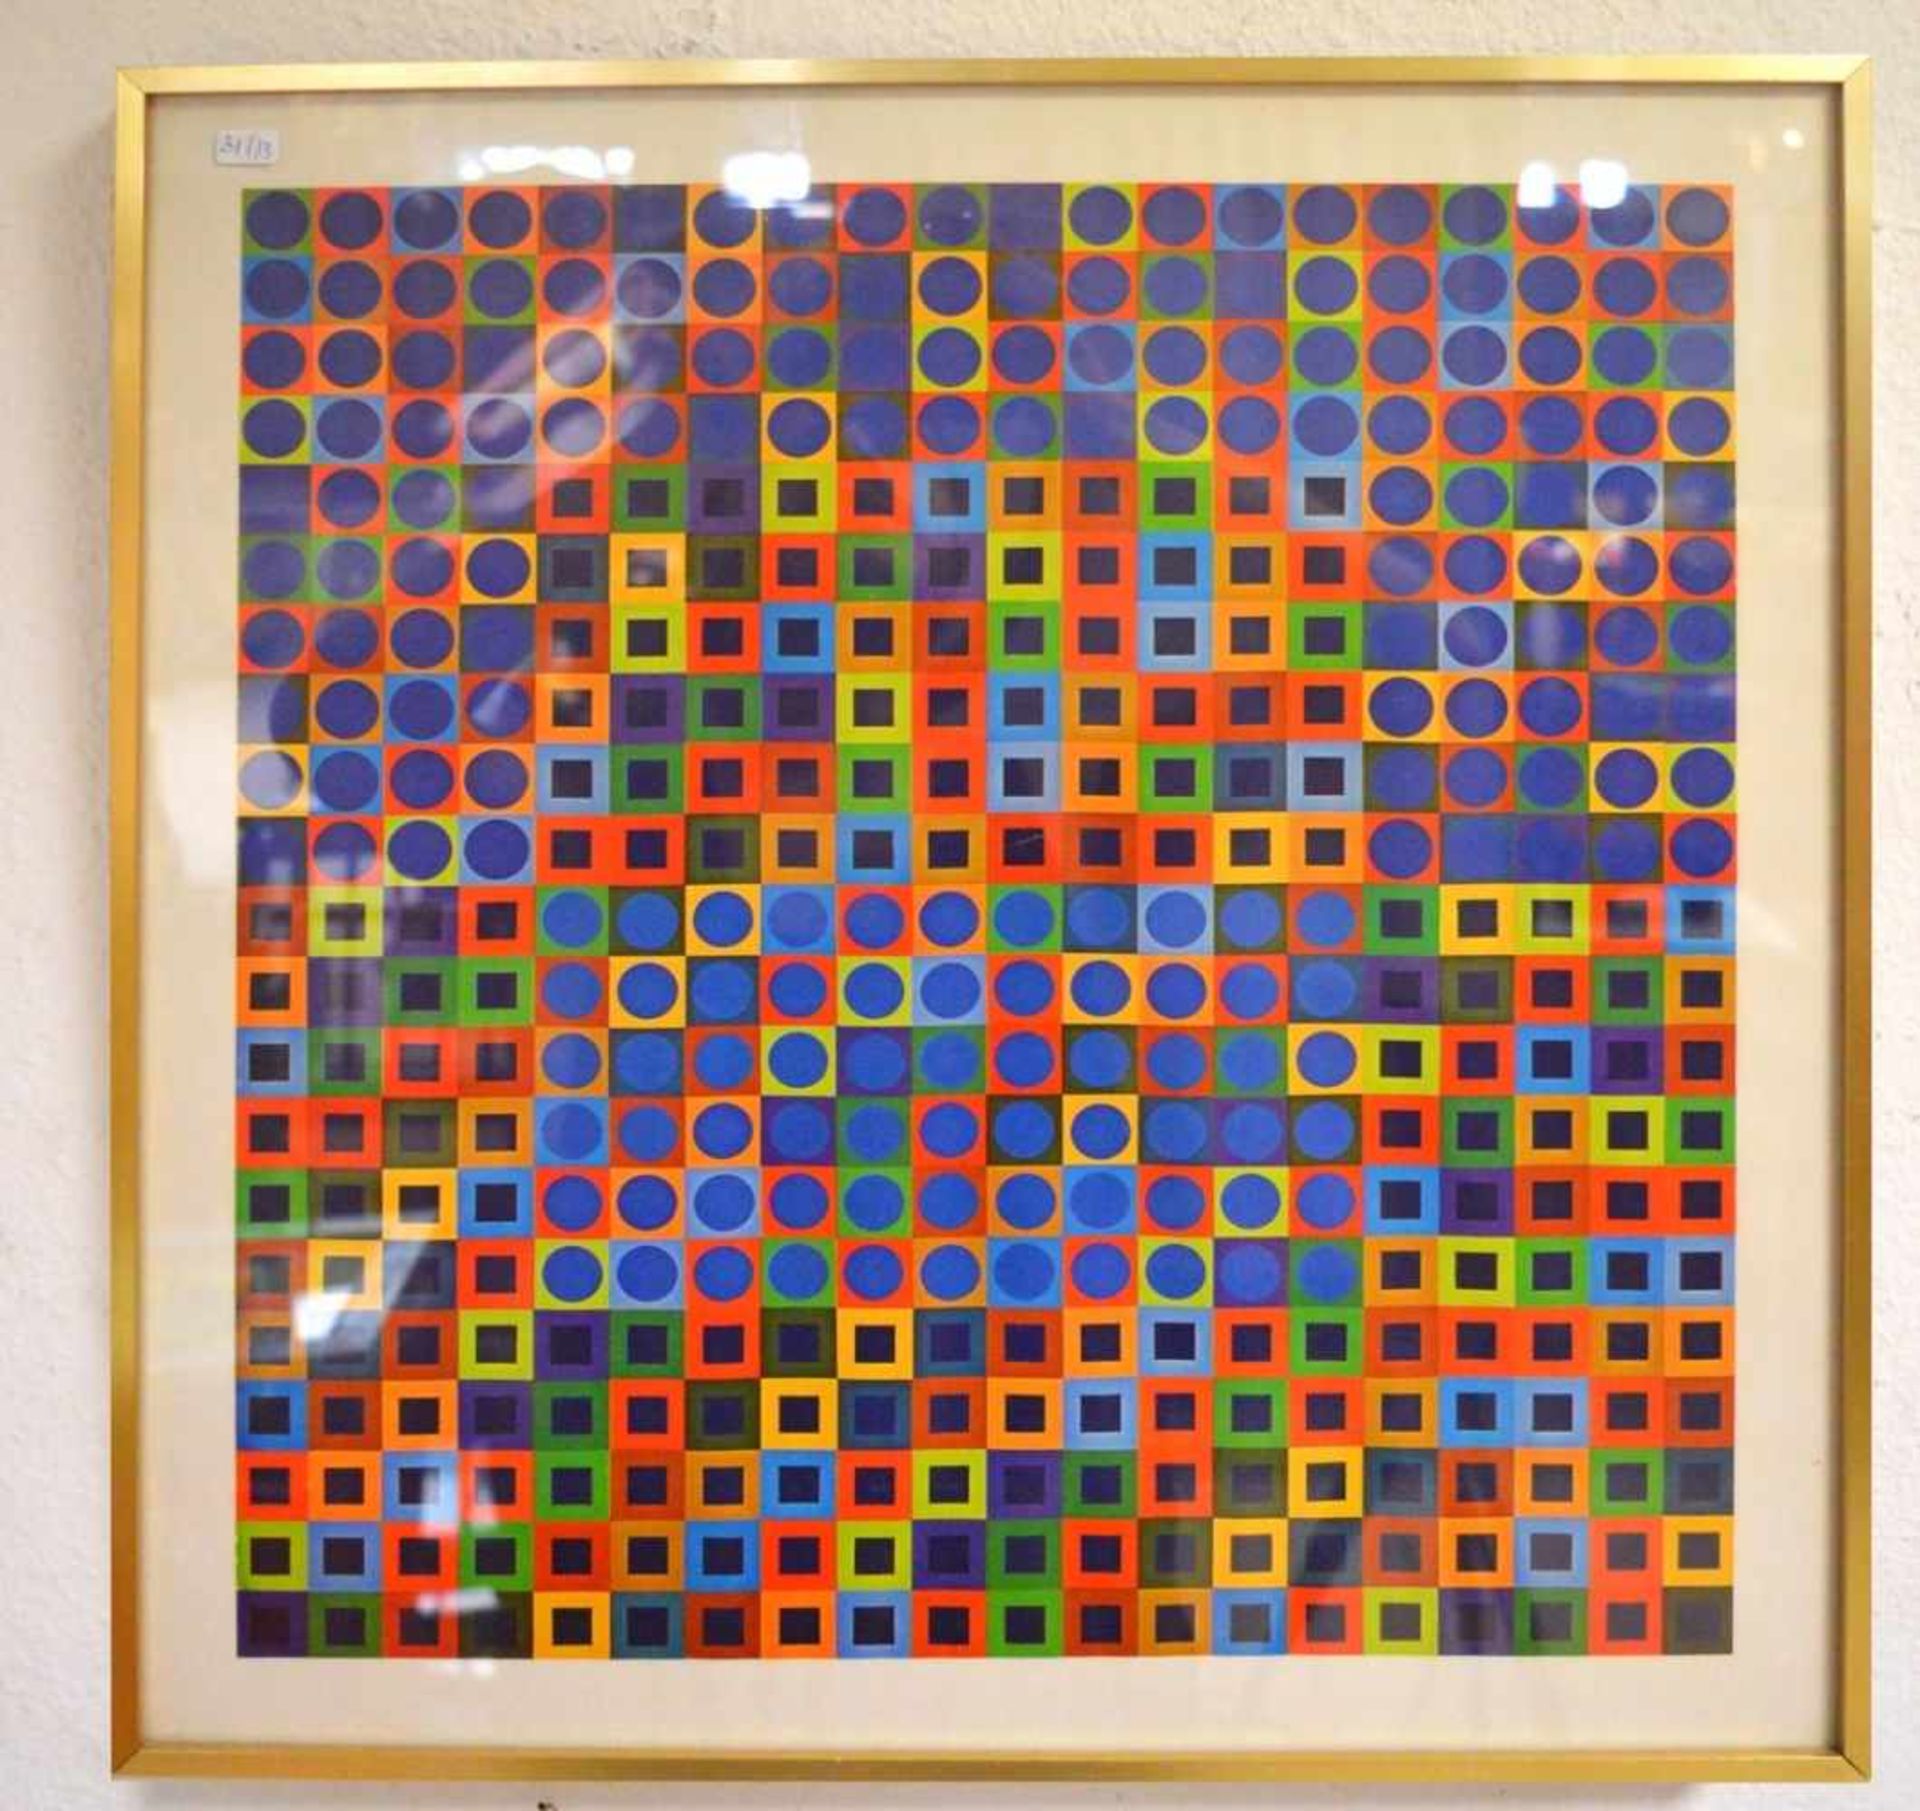 GrafikBunte Kreise und Quadrate, Blattgröße 40 X 42 cm, im Rahmen, 47 X 50 cm